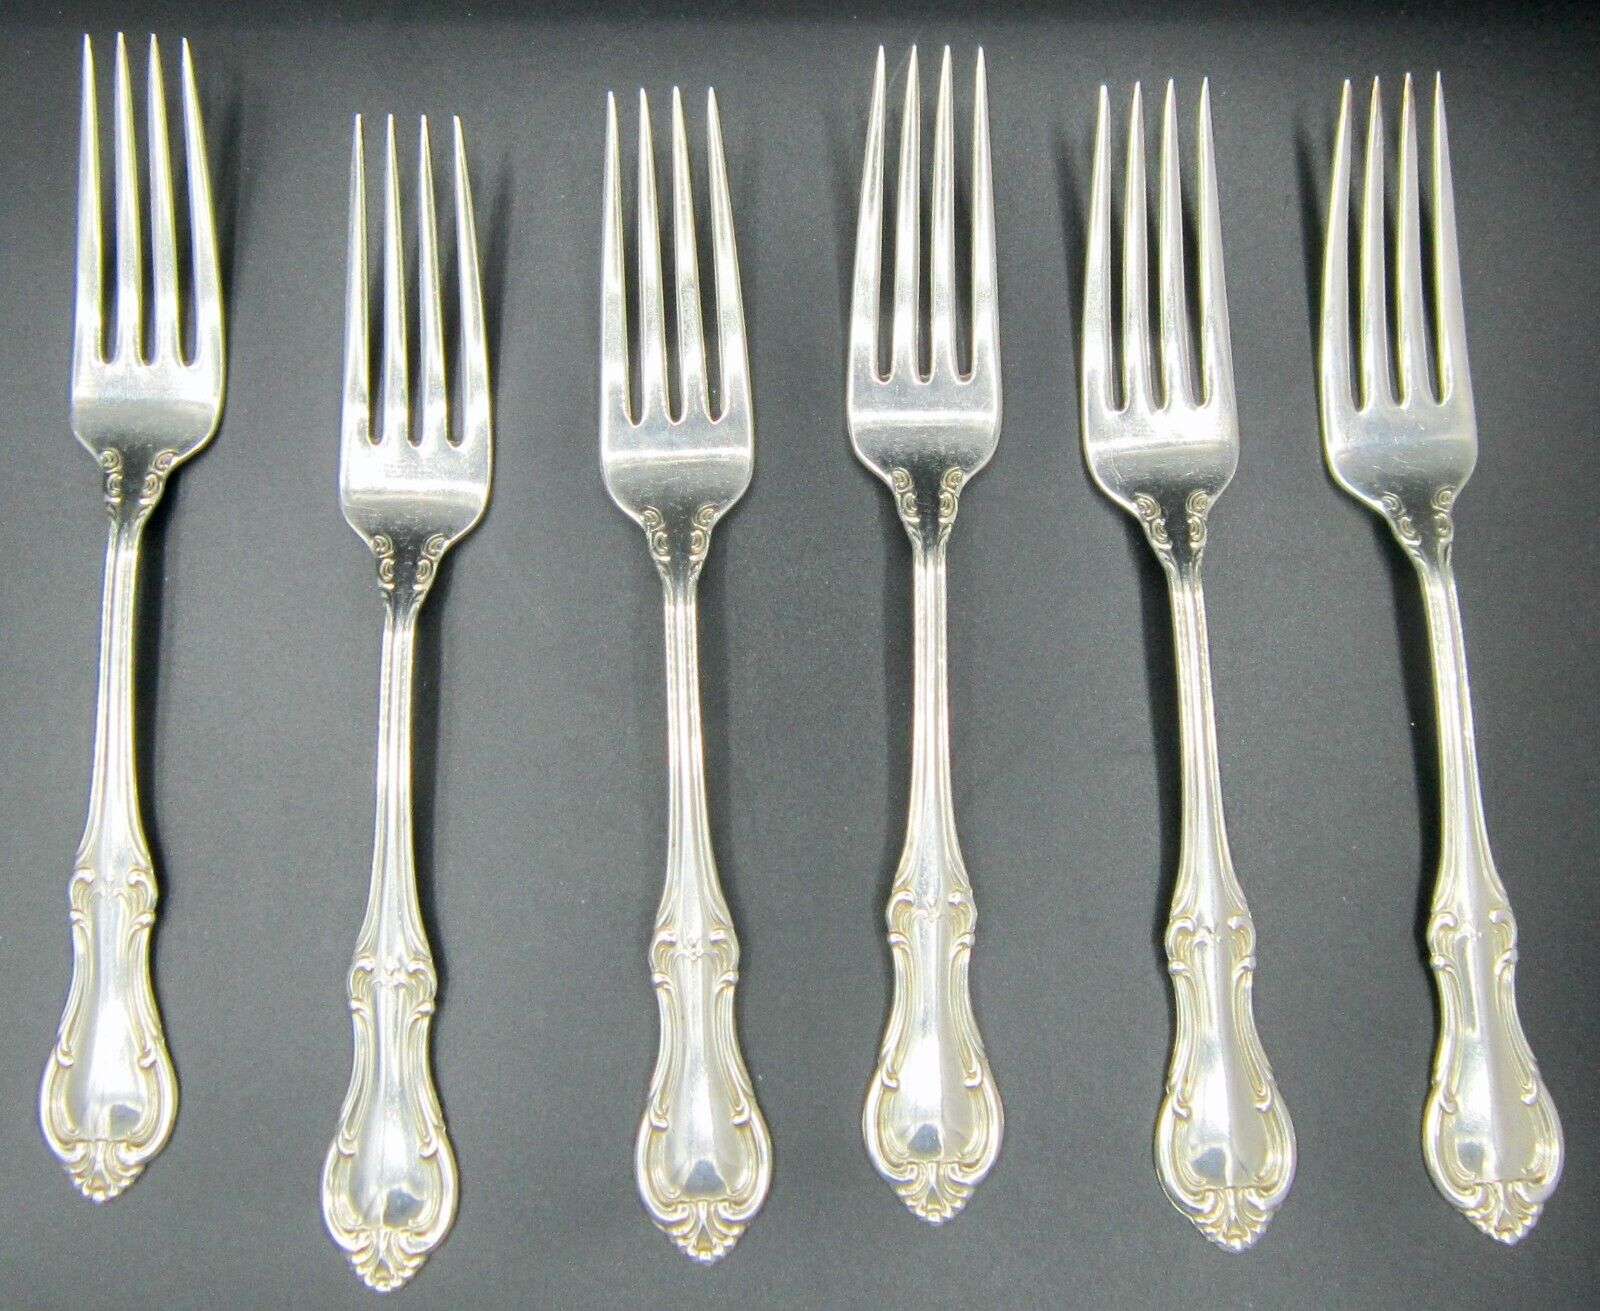 International Joan of Arc Sterling Silver Dinner Forks (6) - 8 In.